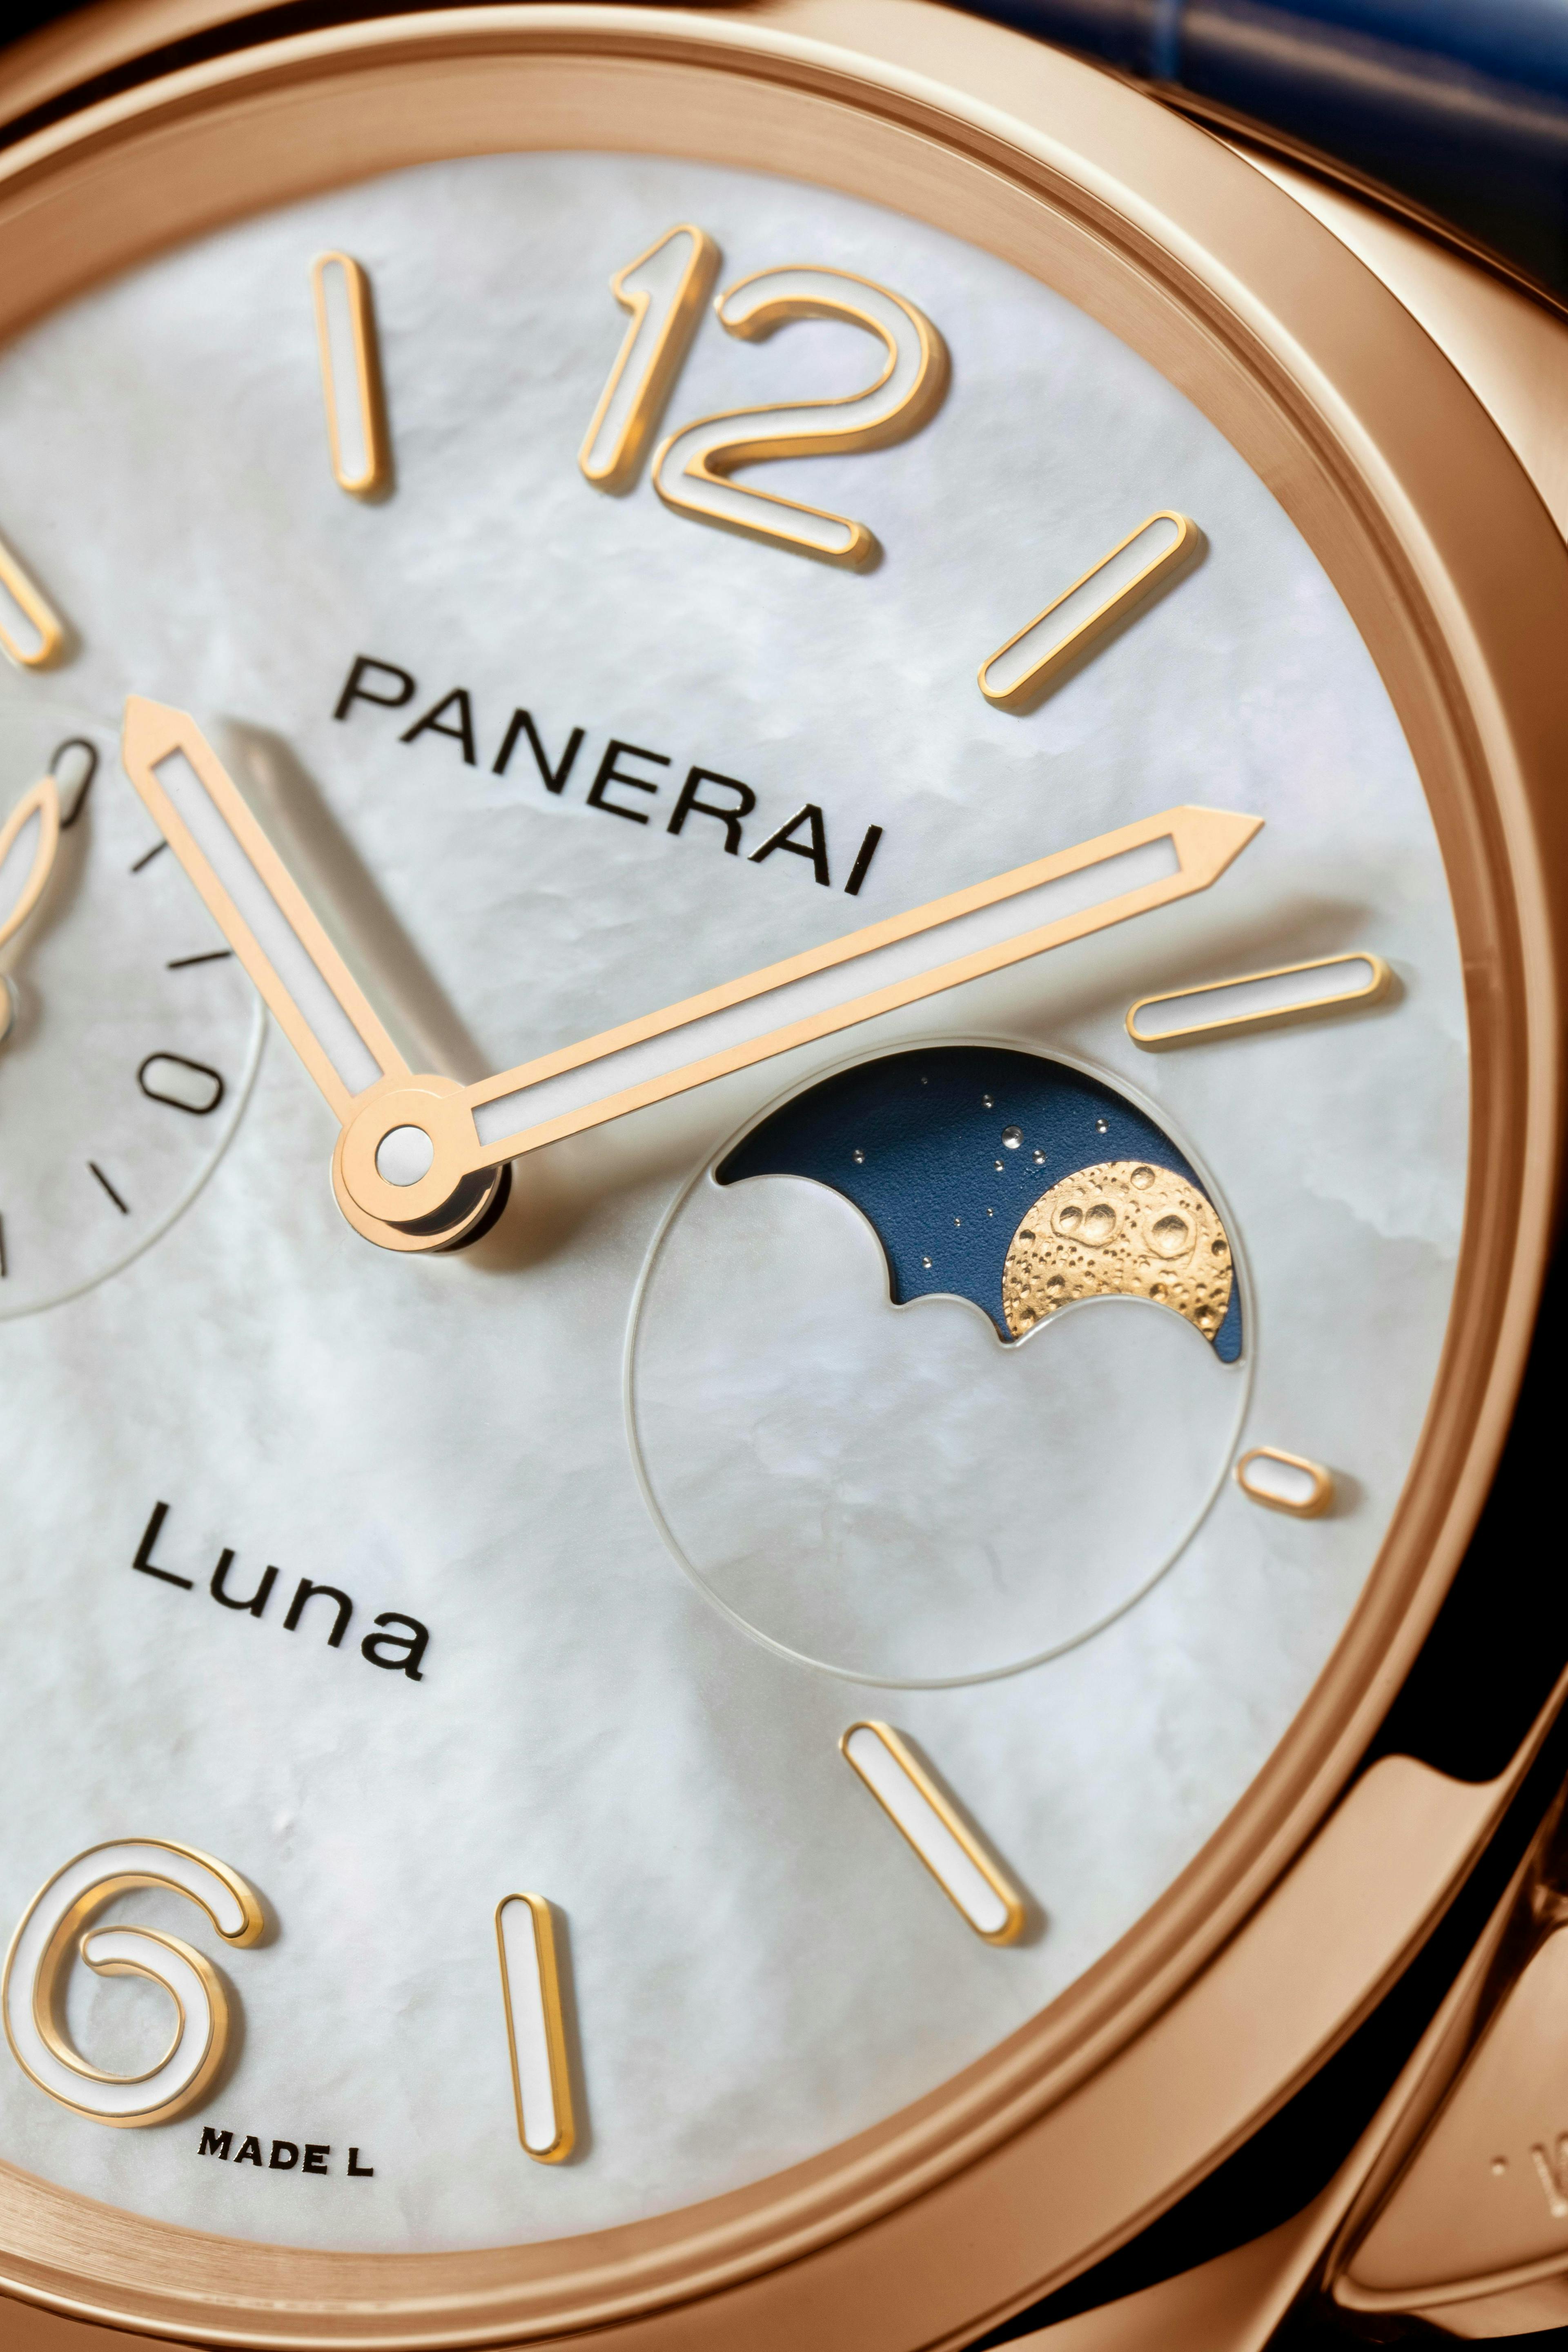 Panerai Luminor Due Luna moonphase complication watch